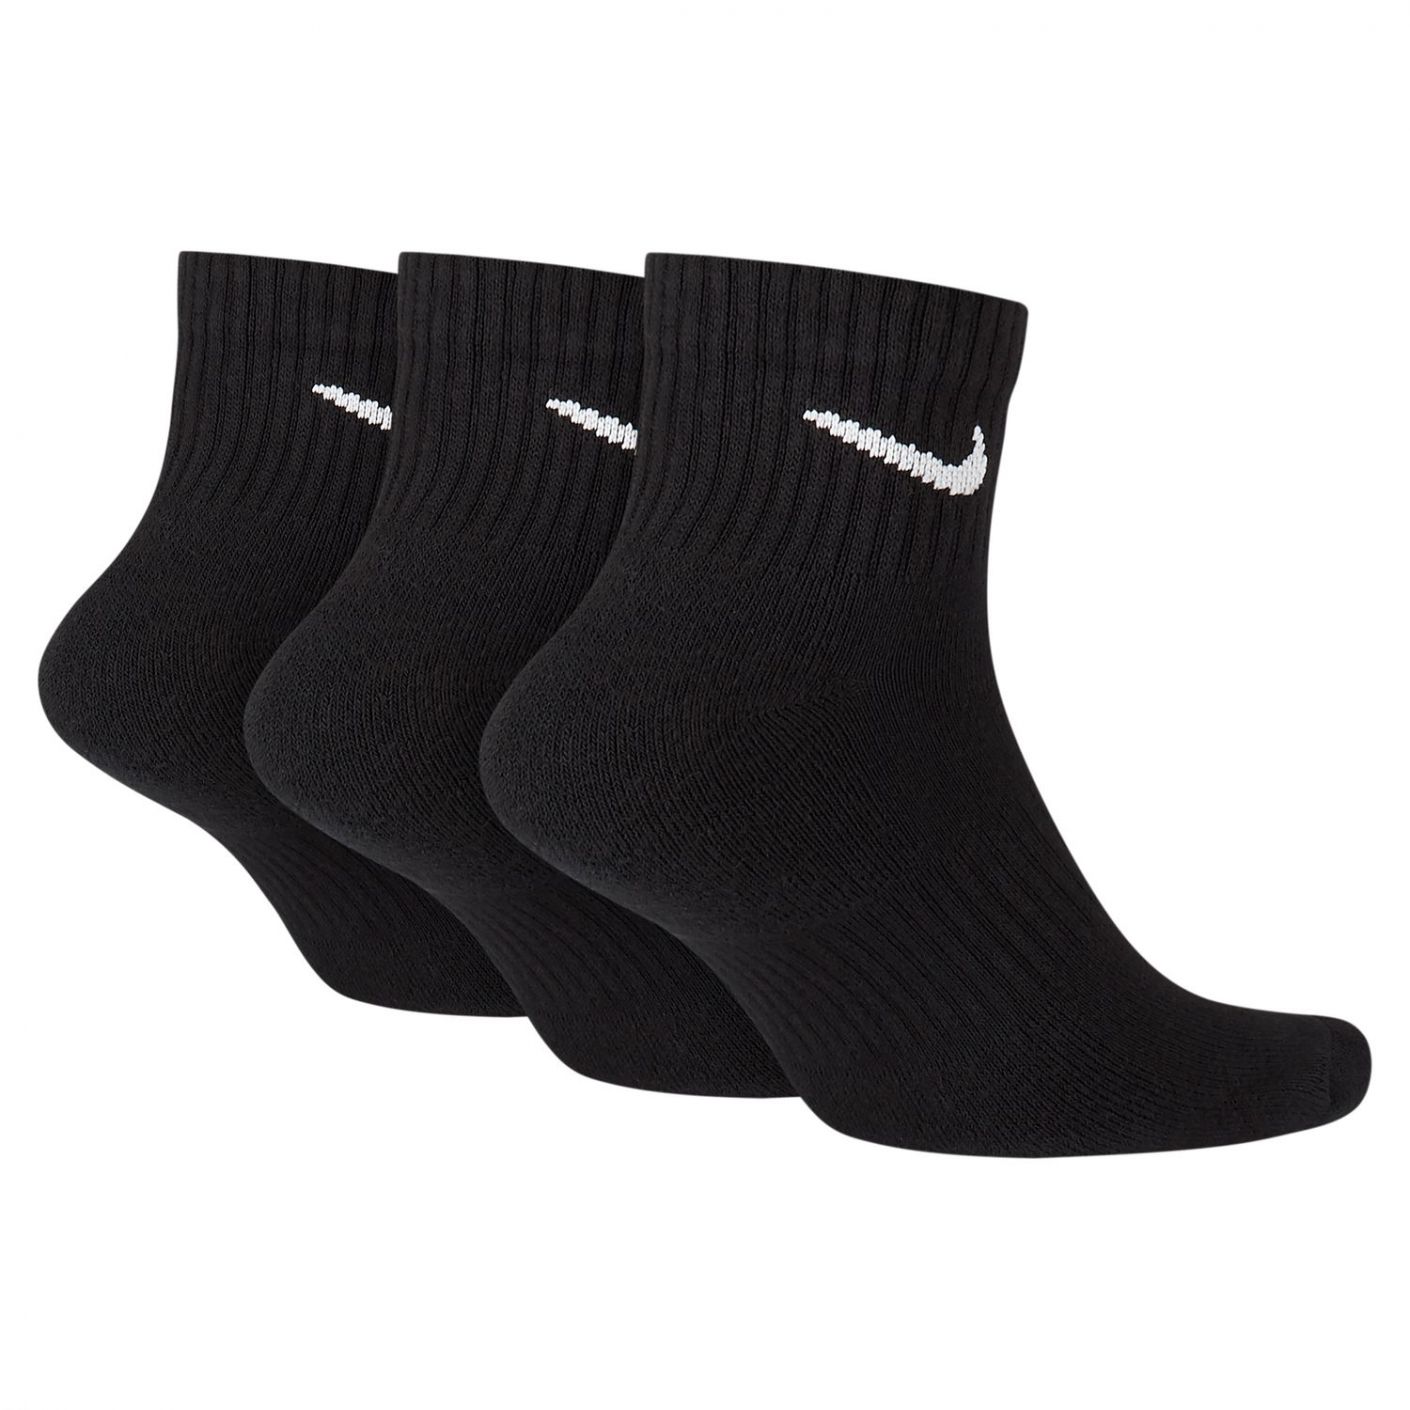 Nike Everyday Cushioned Low Socks